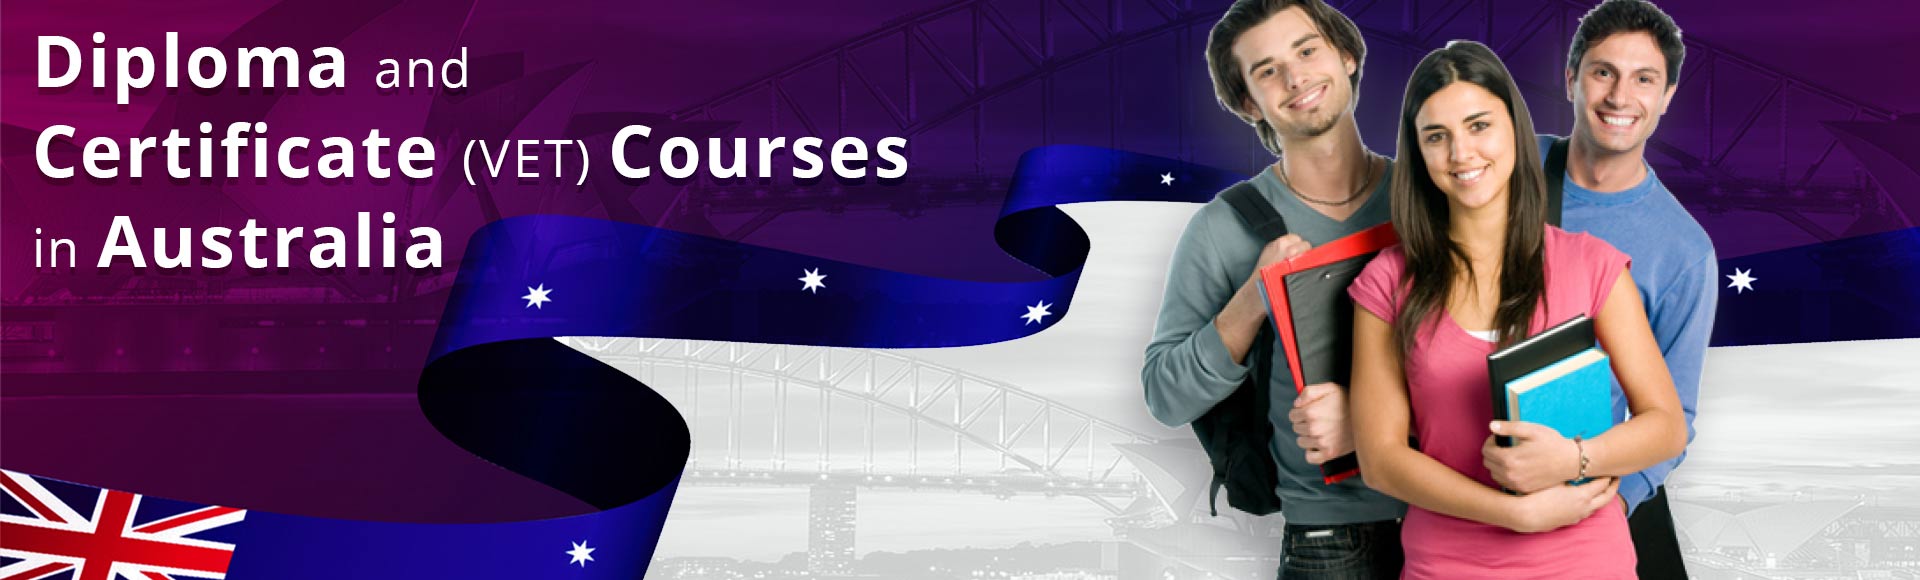 Diploma and certificate (VET) courses in Australia